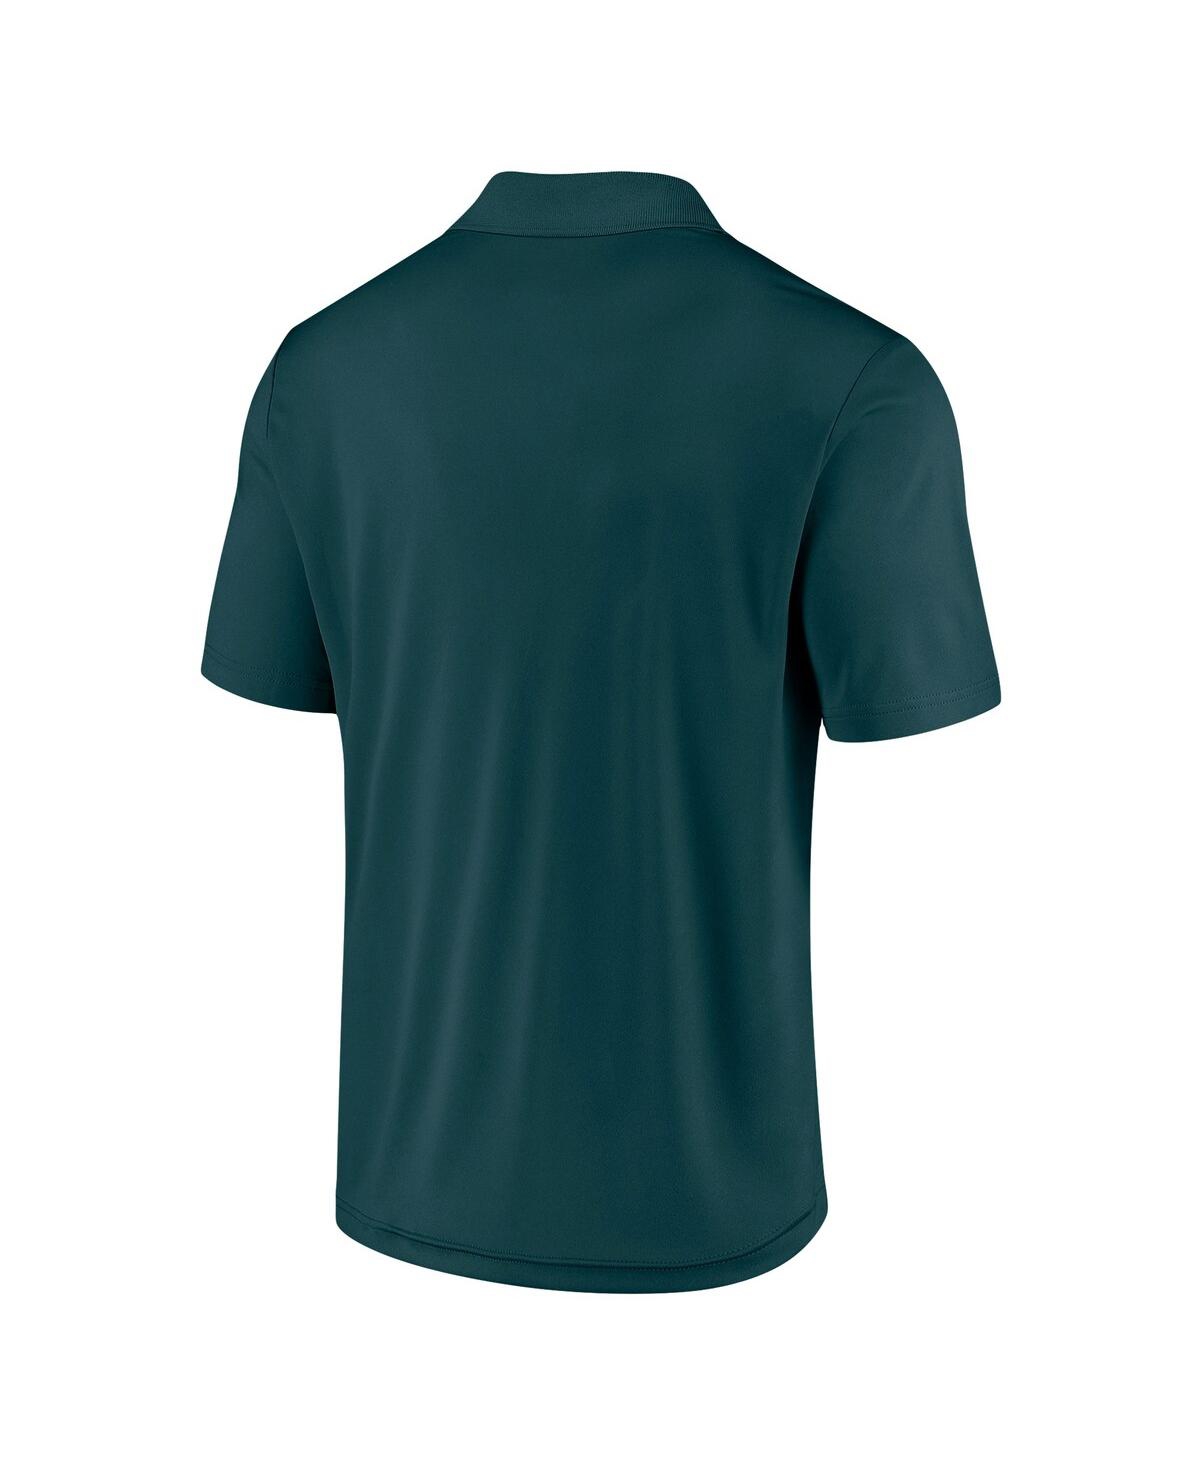 Shop Fanatics Men's  Midnight Green Philadelphia Eagles Component Polo Shirt